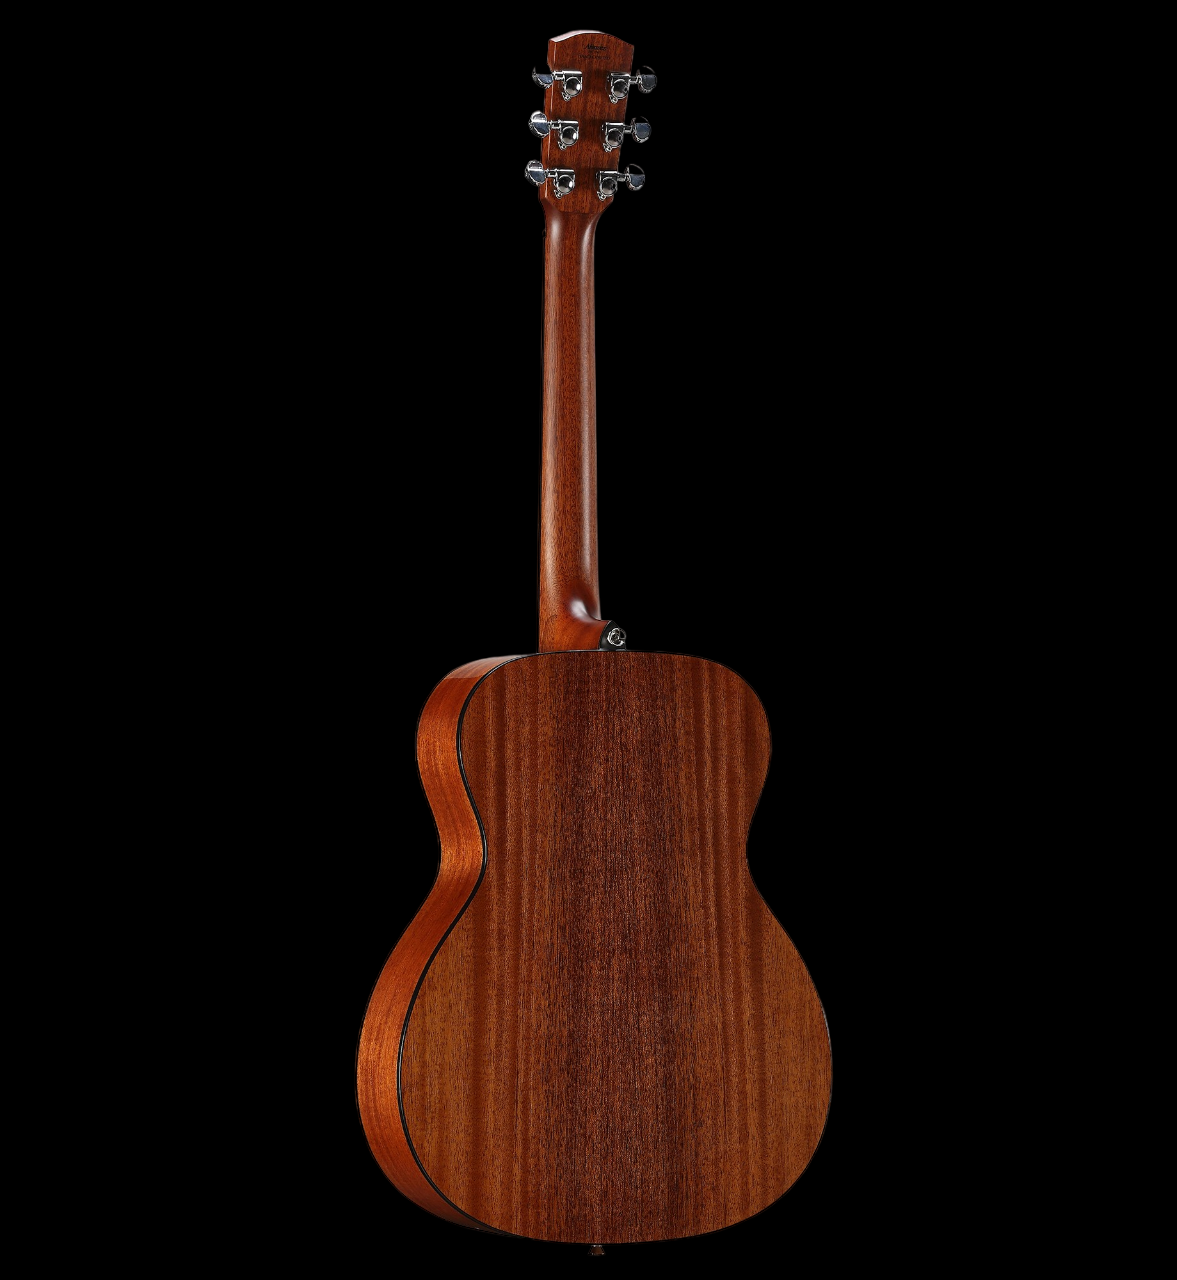 Alvarez AF66SHB Acoustic Guitar